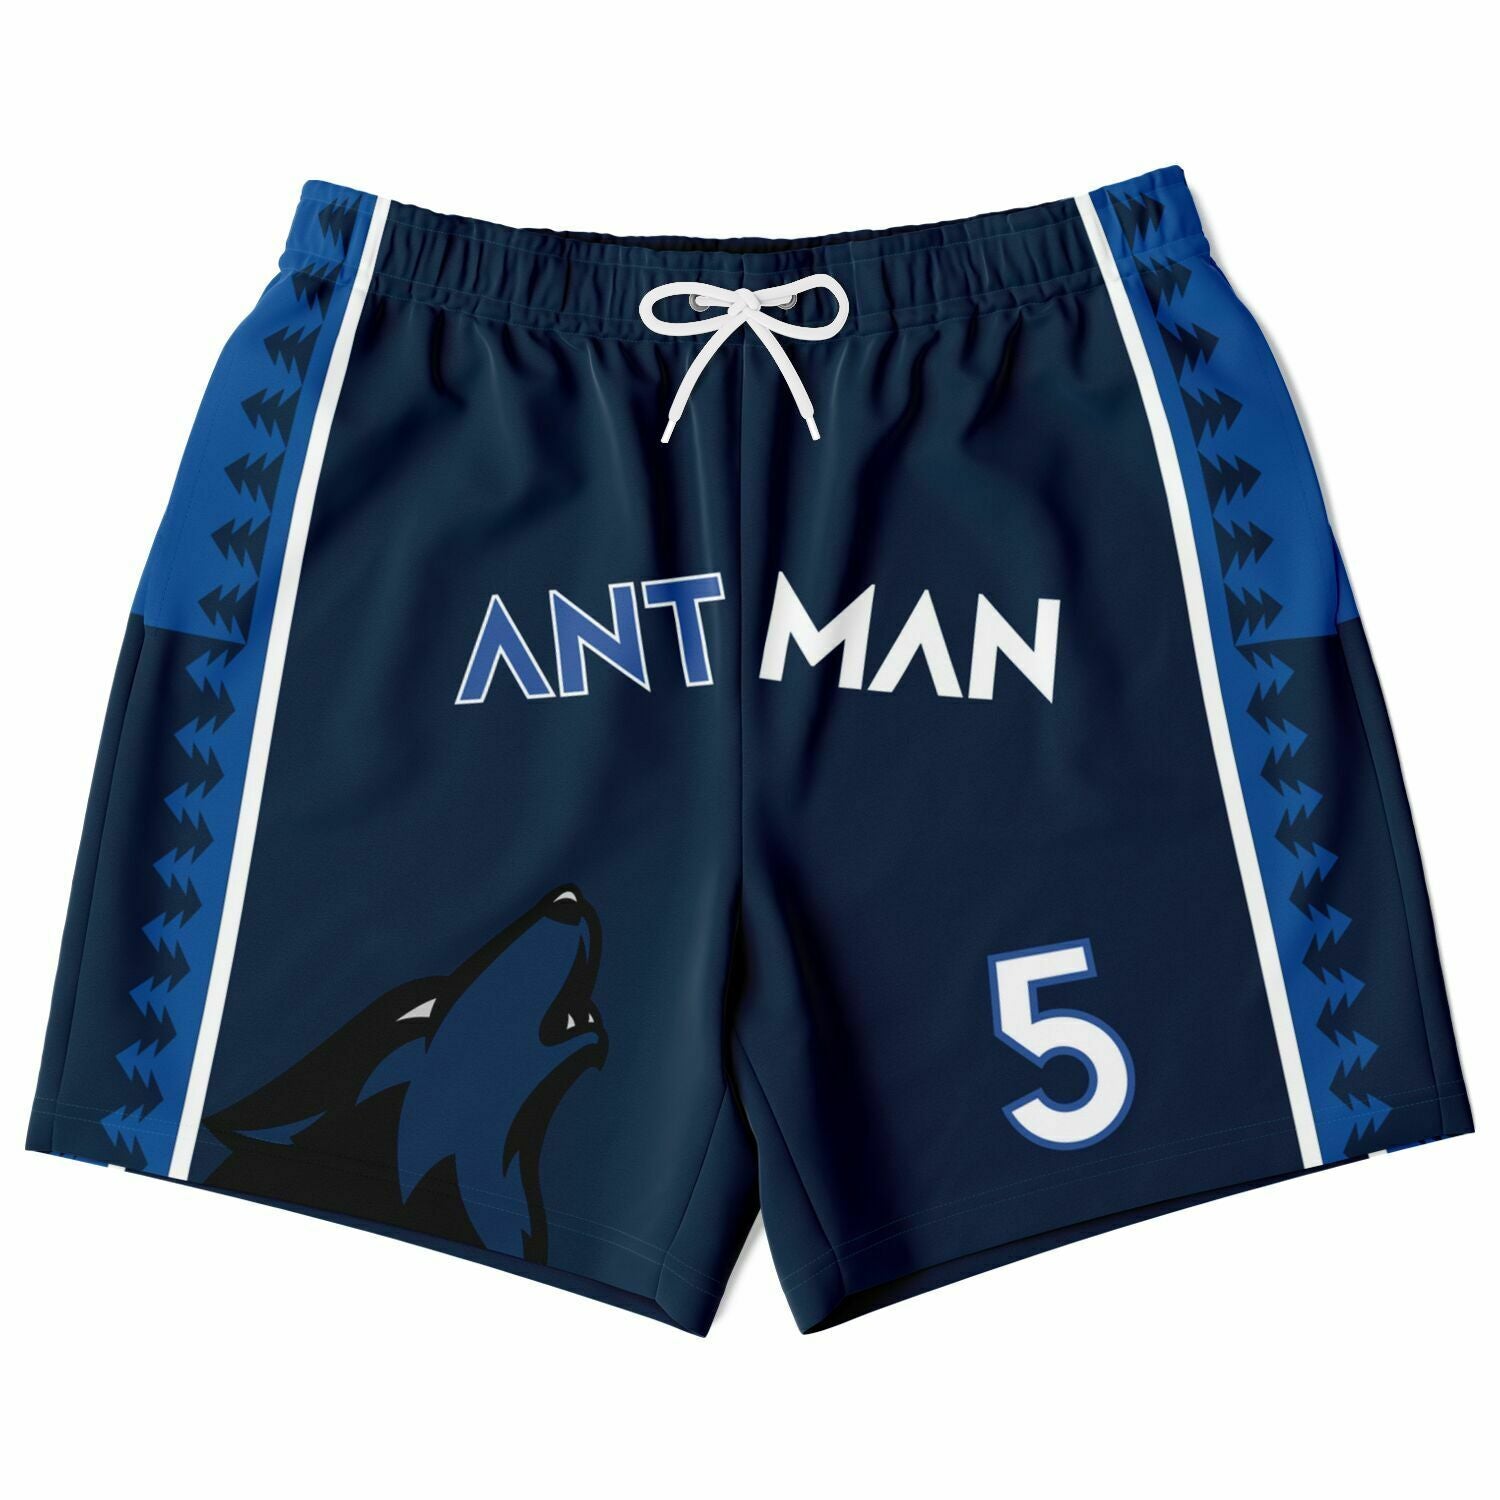 DearBBall Fashion Shorts - Ant-Man Playoffs Edition 